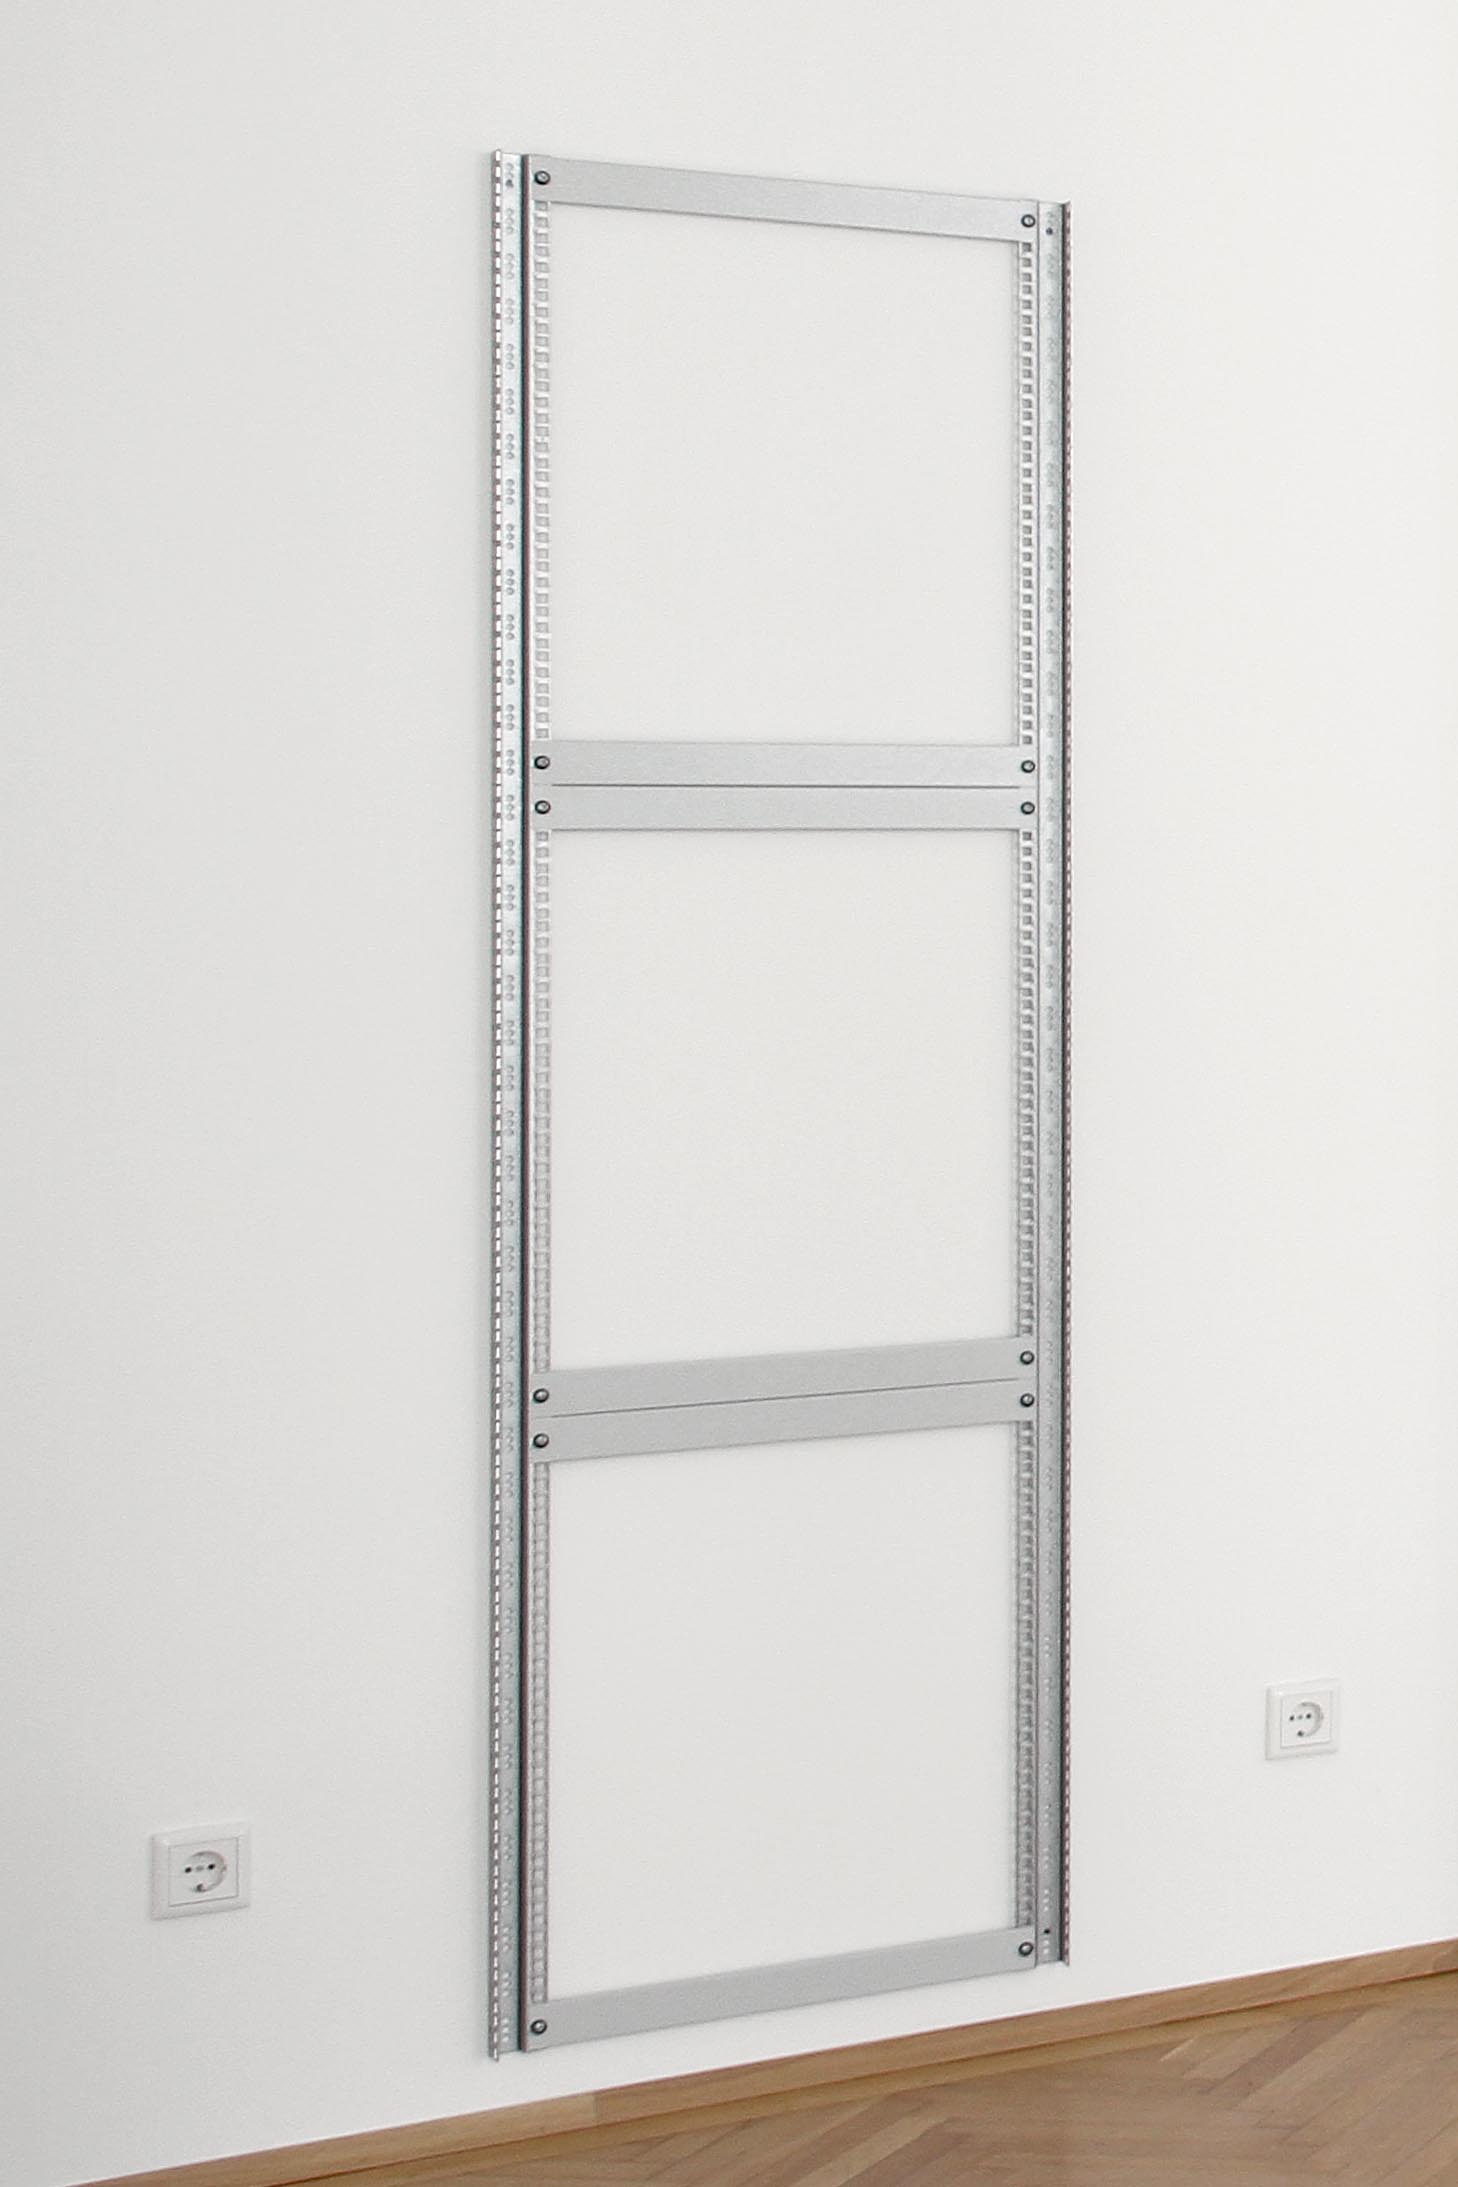 Ulrich Nausner, Memory Object (Grey) #4, 2017,  server rack rails, blank panels, screws , 186,5 x 54,5 x 3,2 cm, 1 + 1AP  